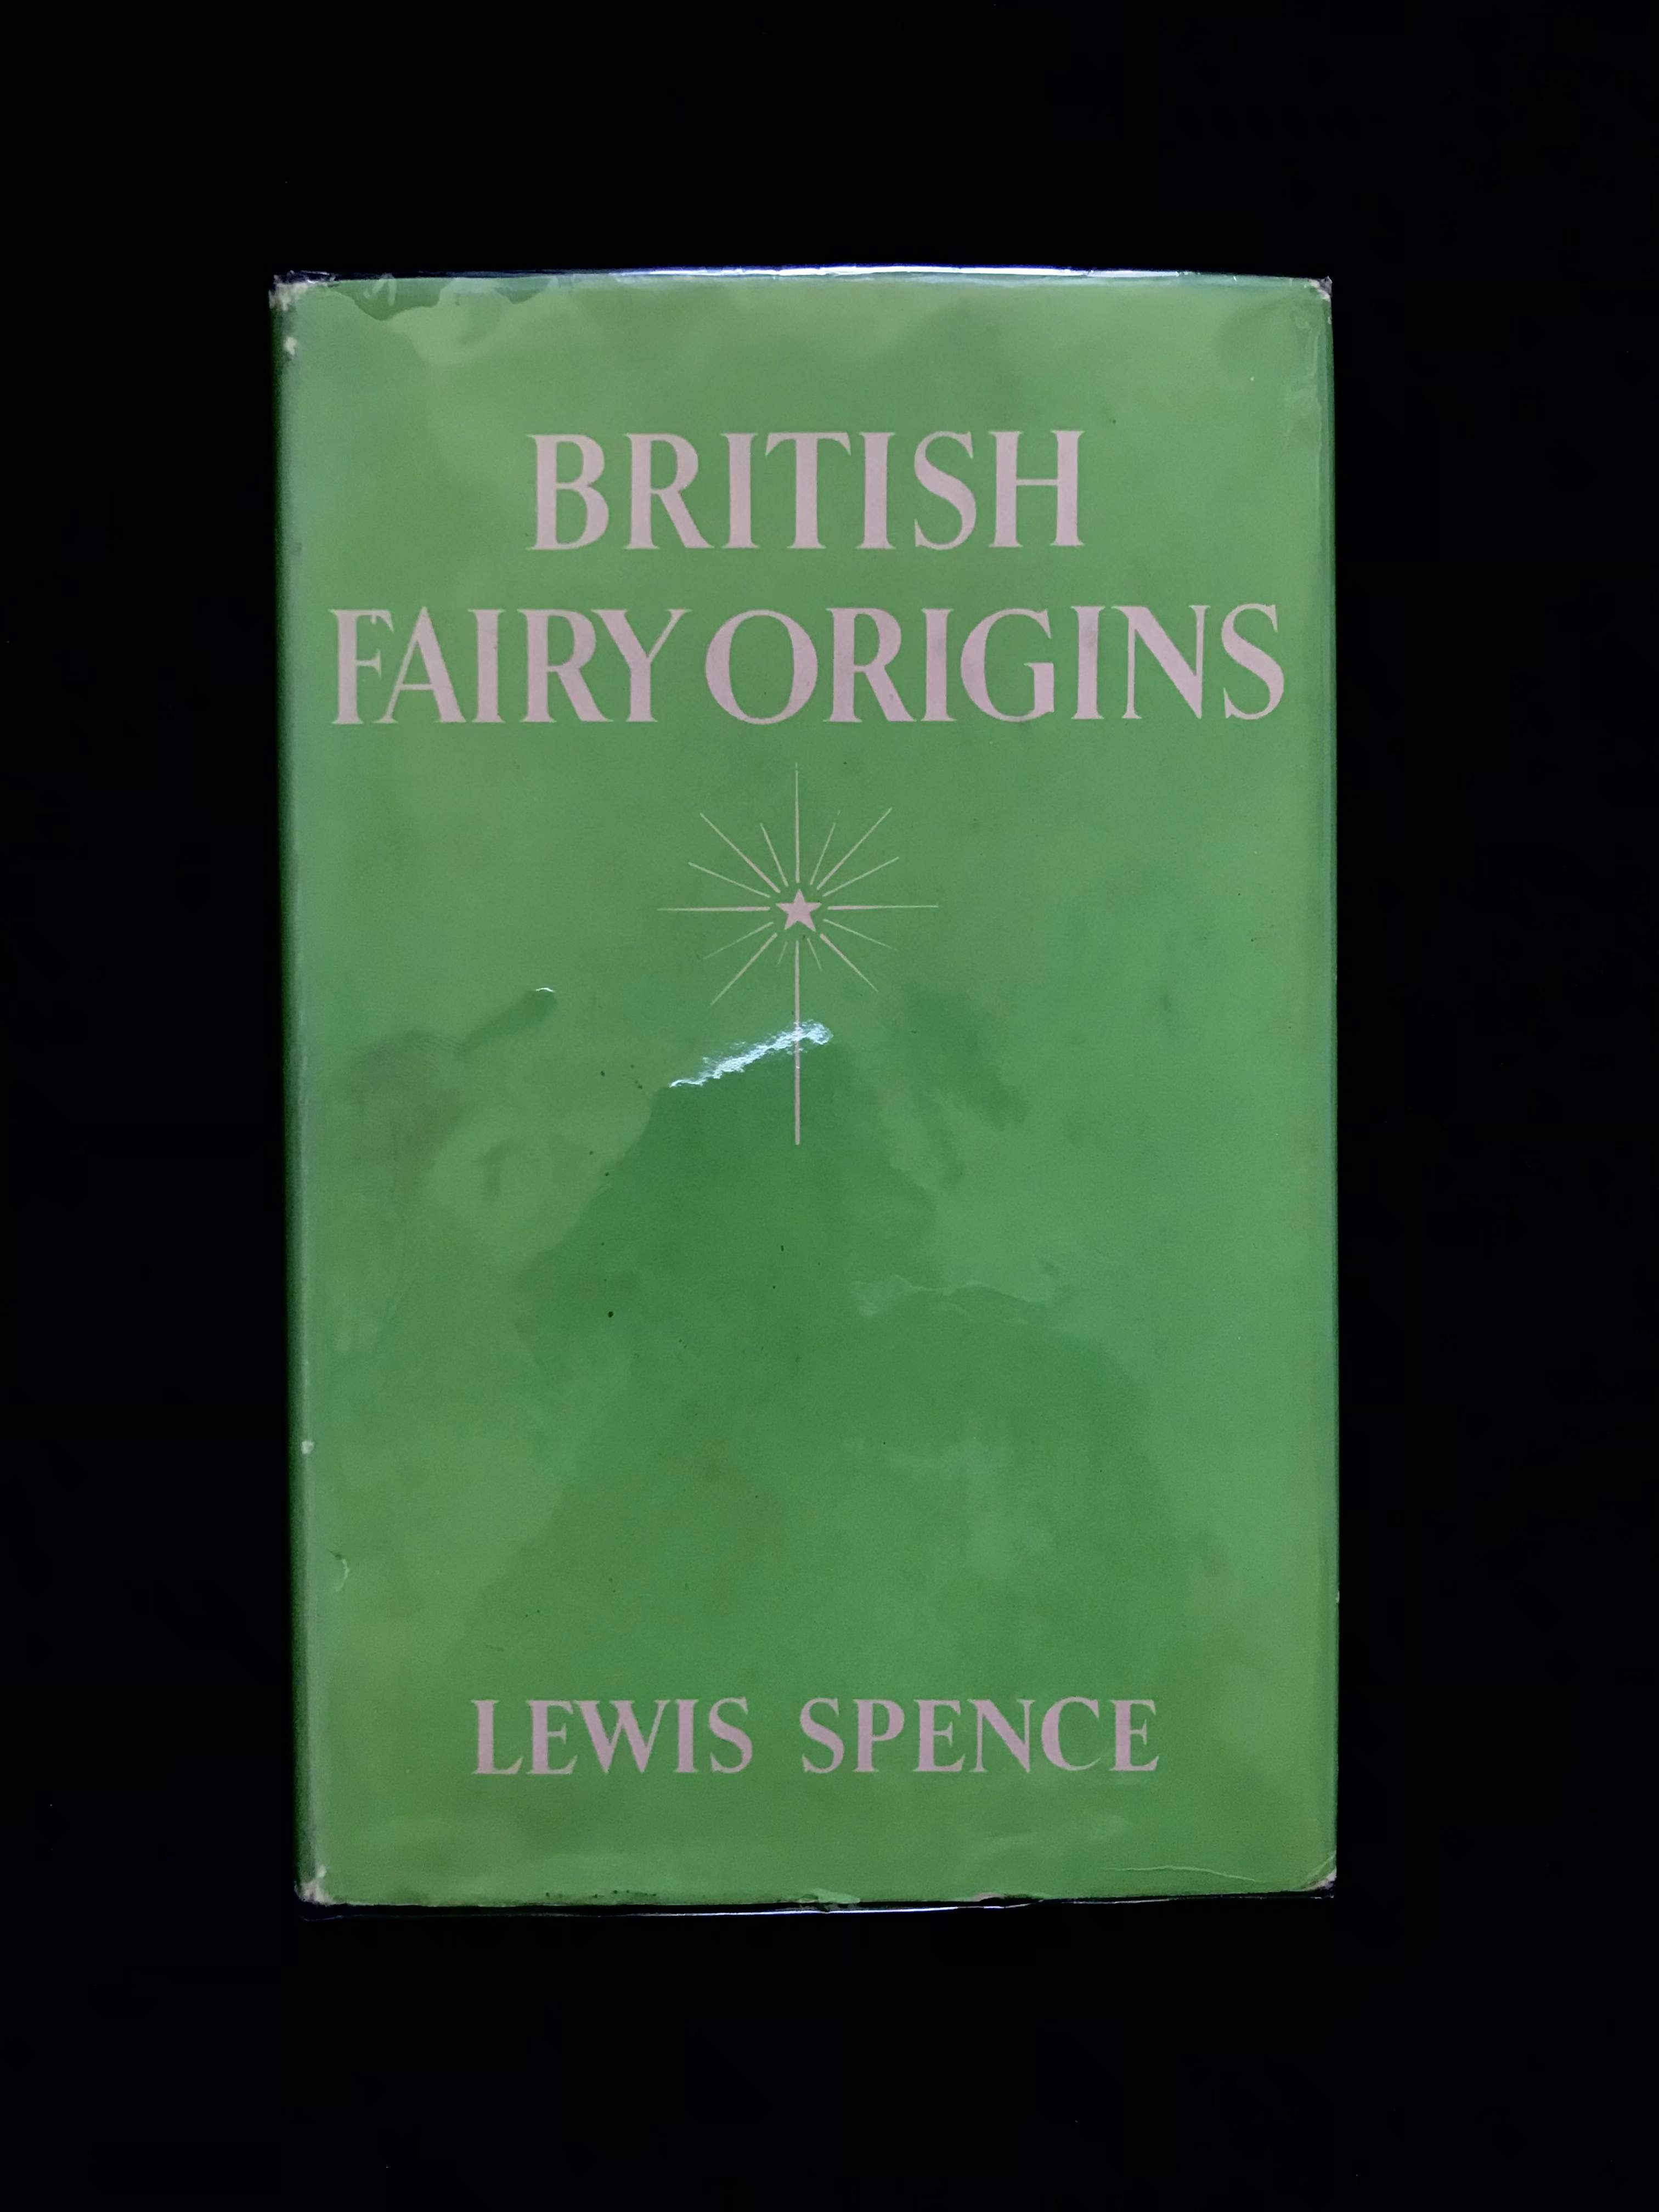 British Fairy Origins by Lewis Spence